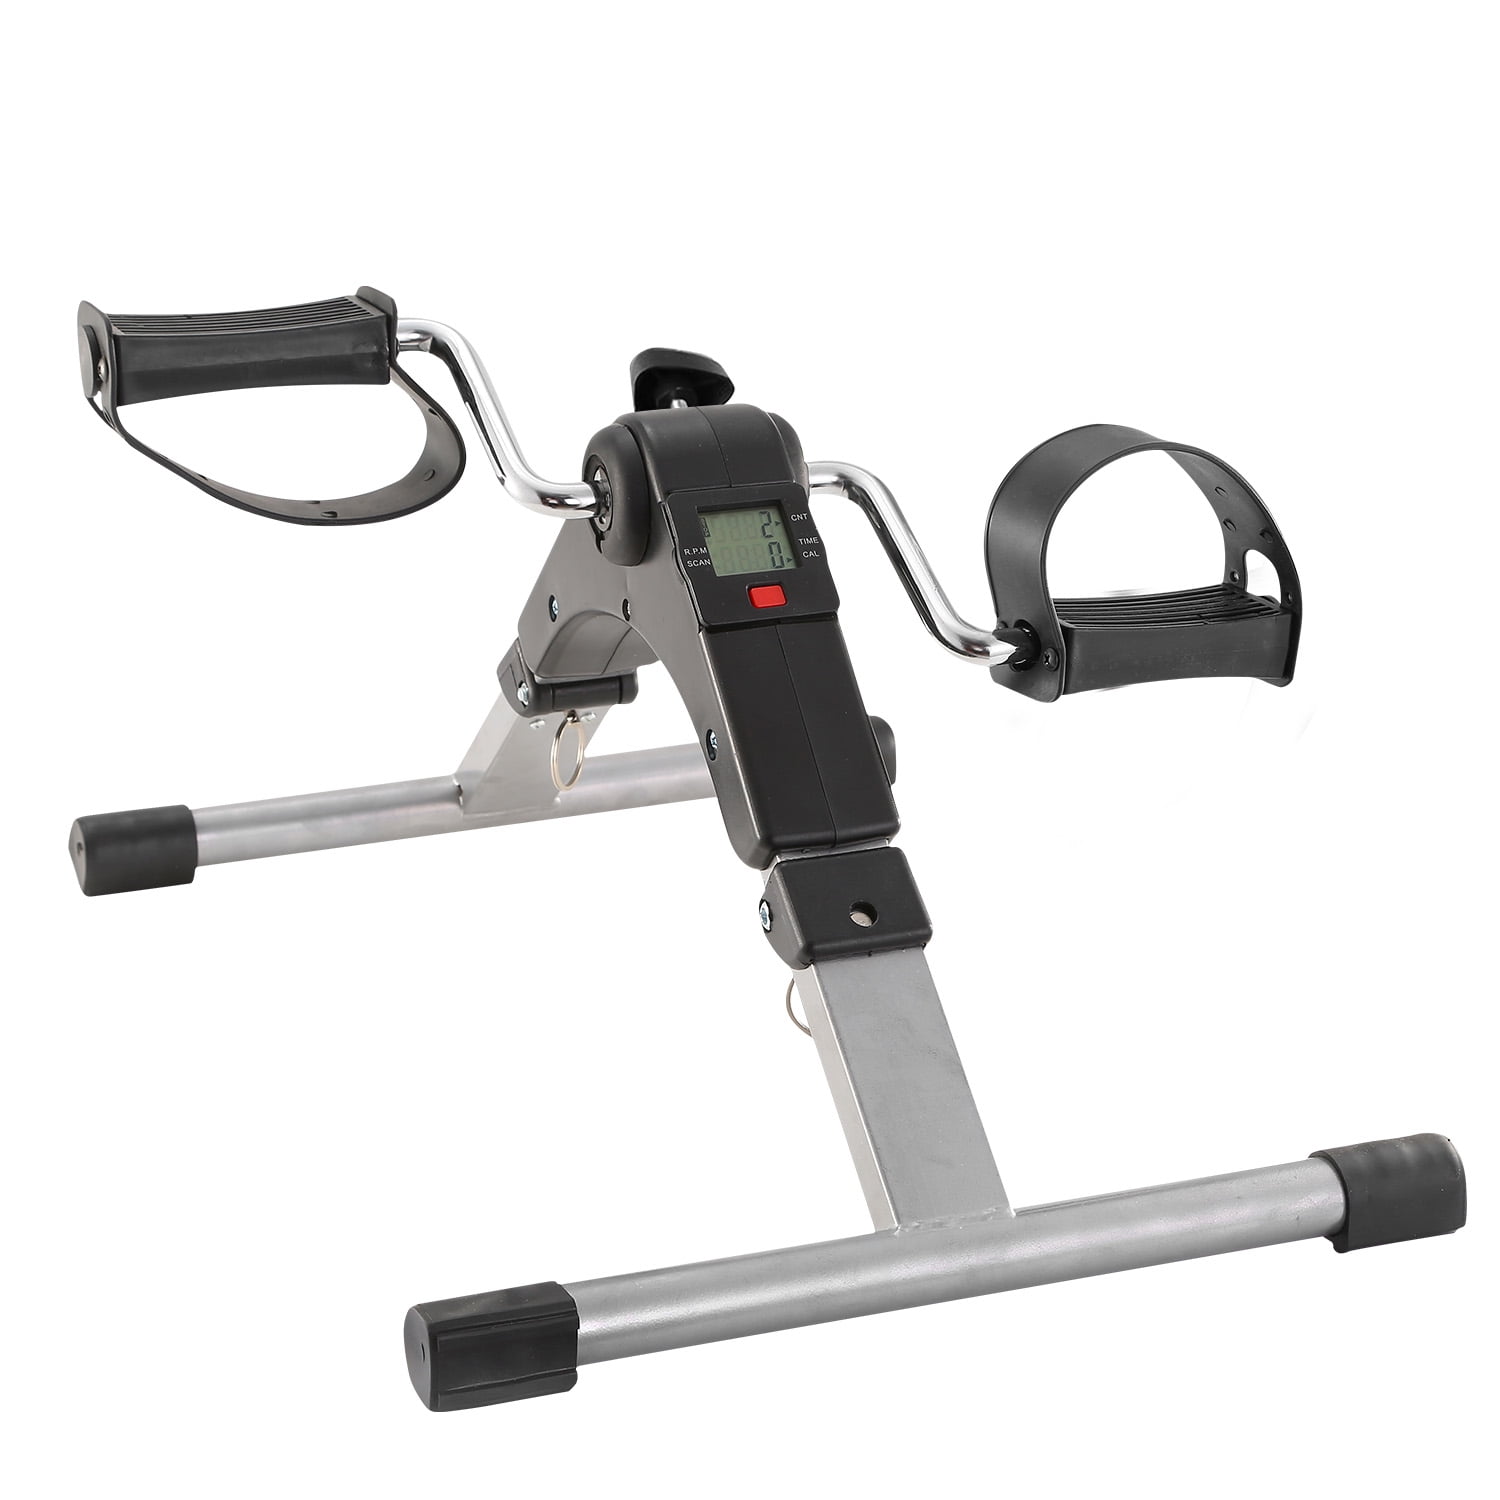 Folding LCD Mini Exercise Bike Pedal Cycle Cardio Arm Leg Fitness Training 